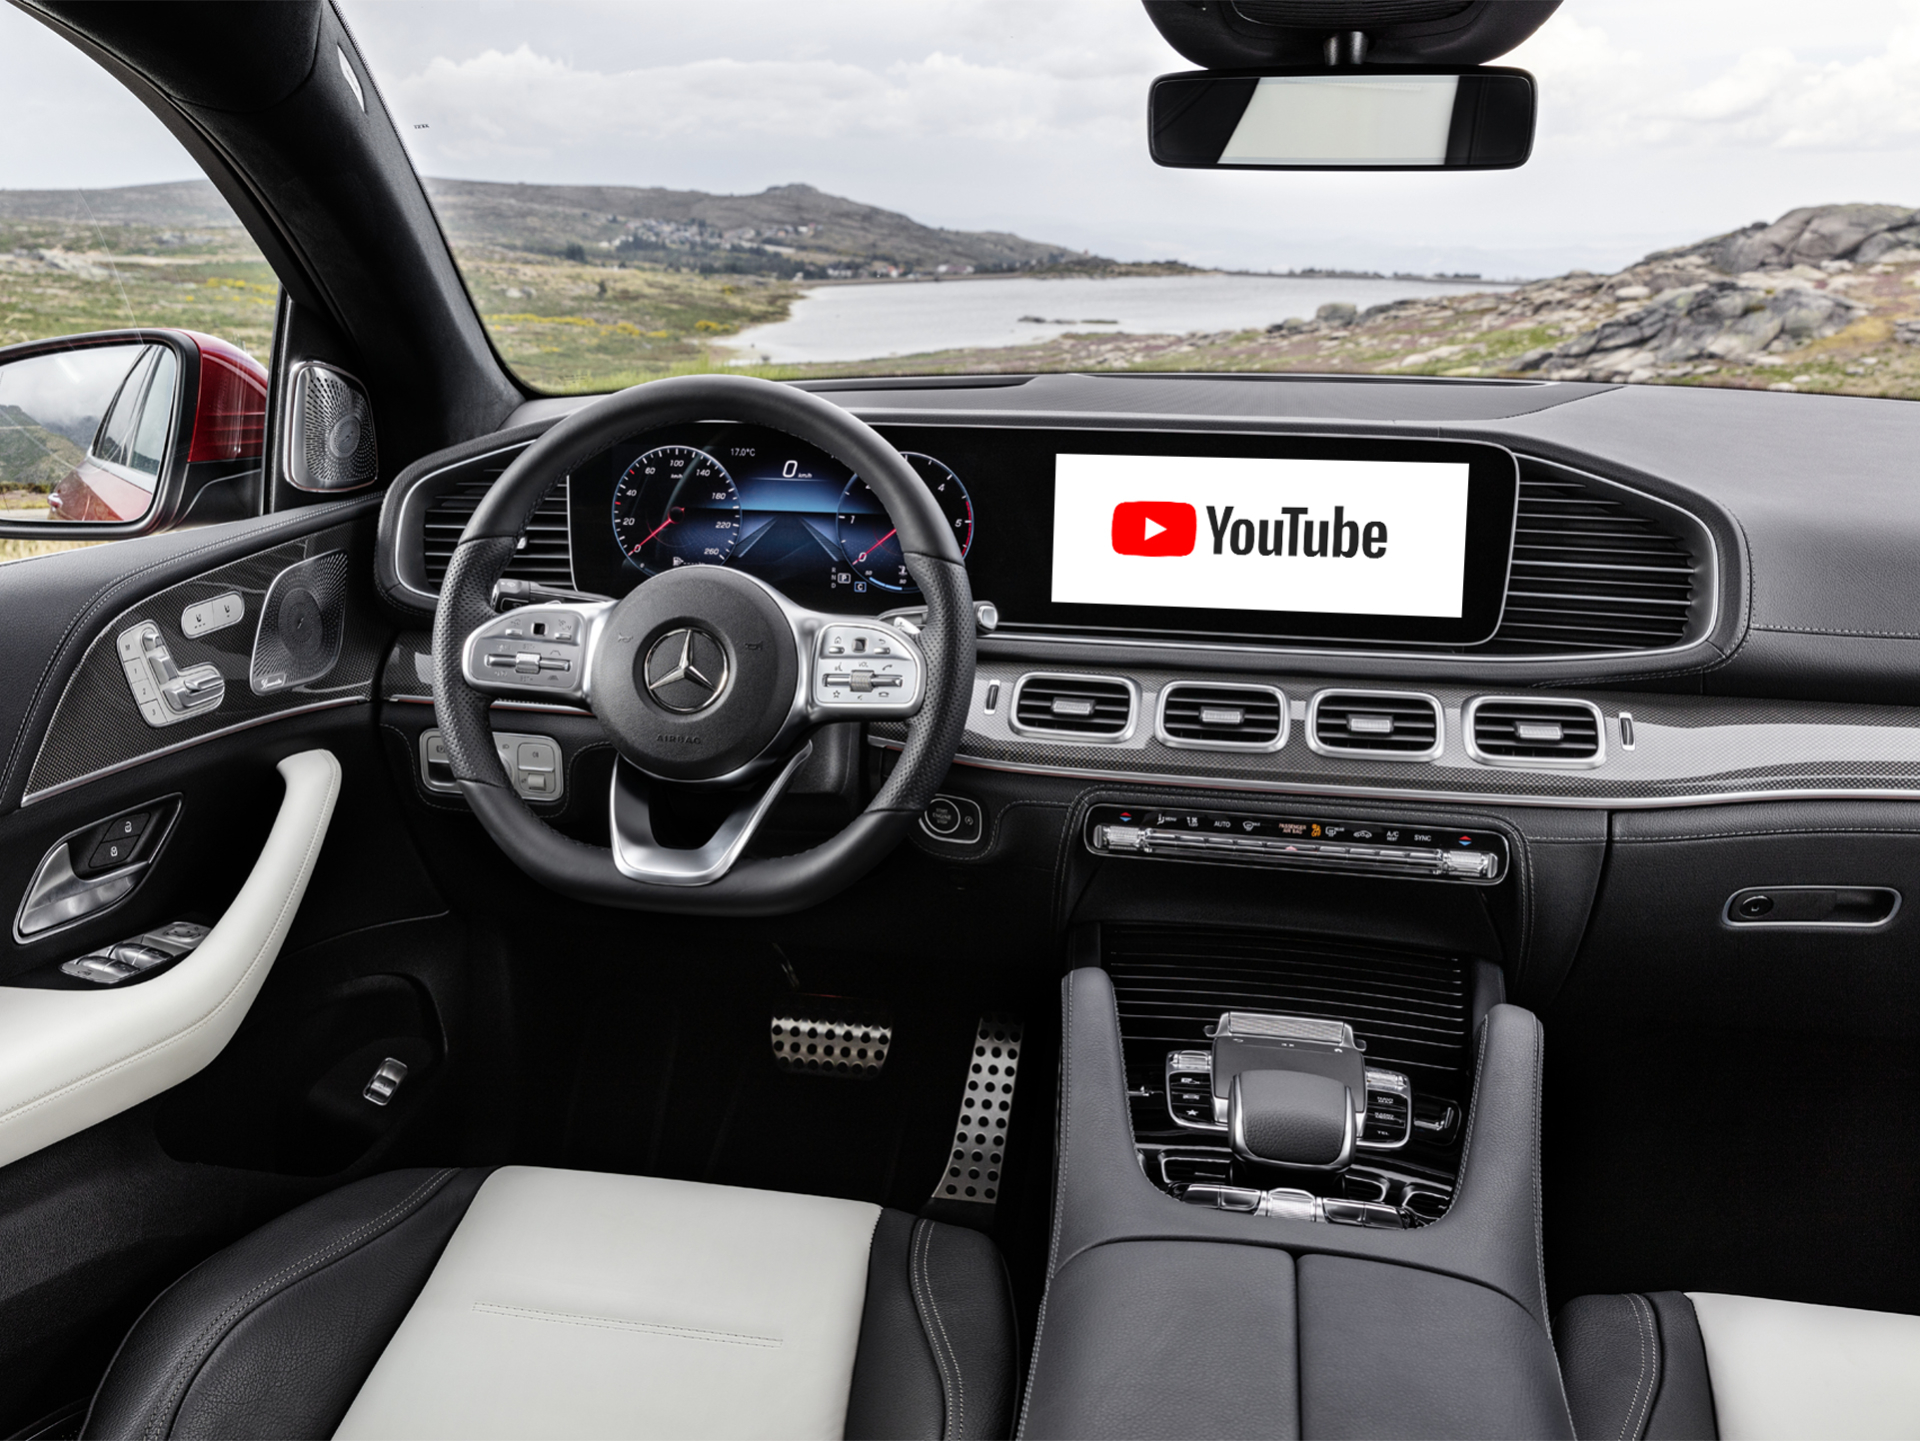 Wireless CarPlay + Youtube/Netflix